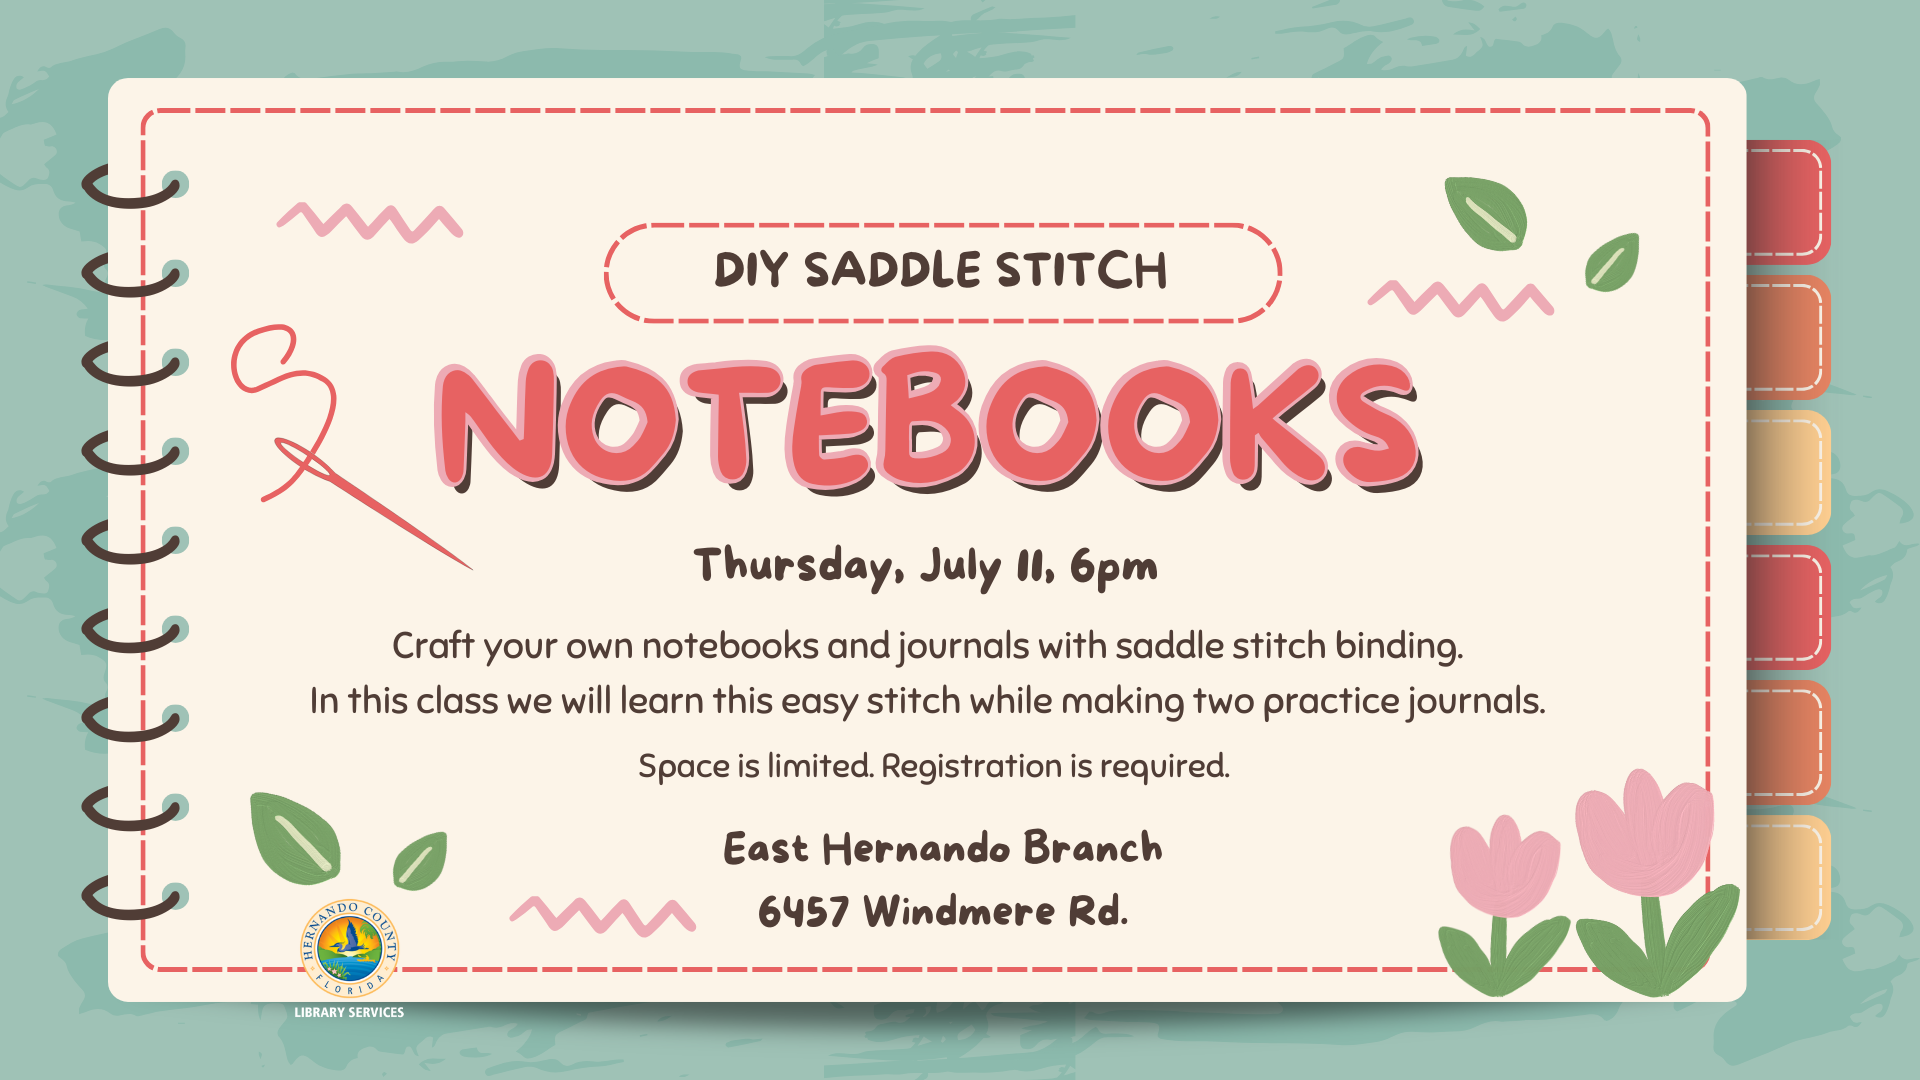 DIY Saddle Stitch Notebooks